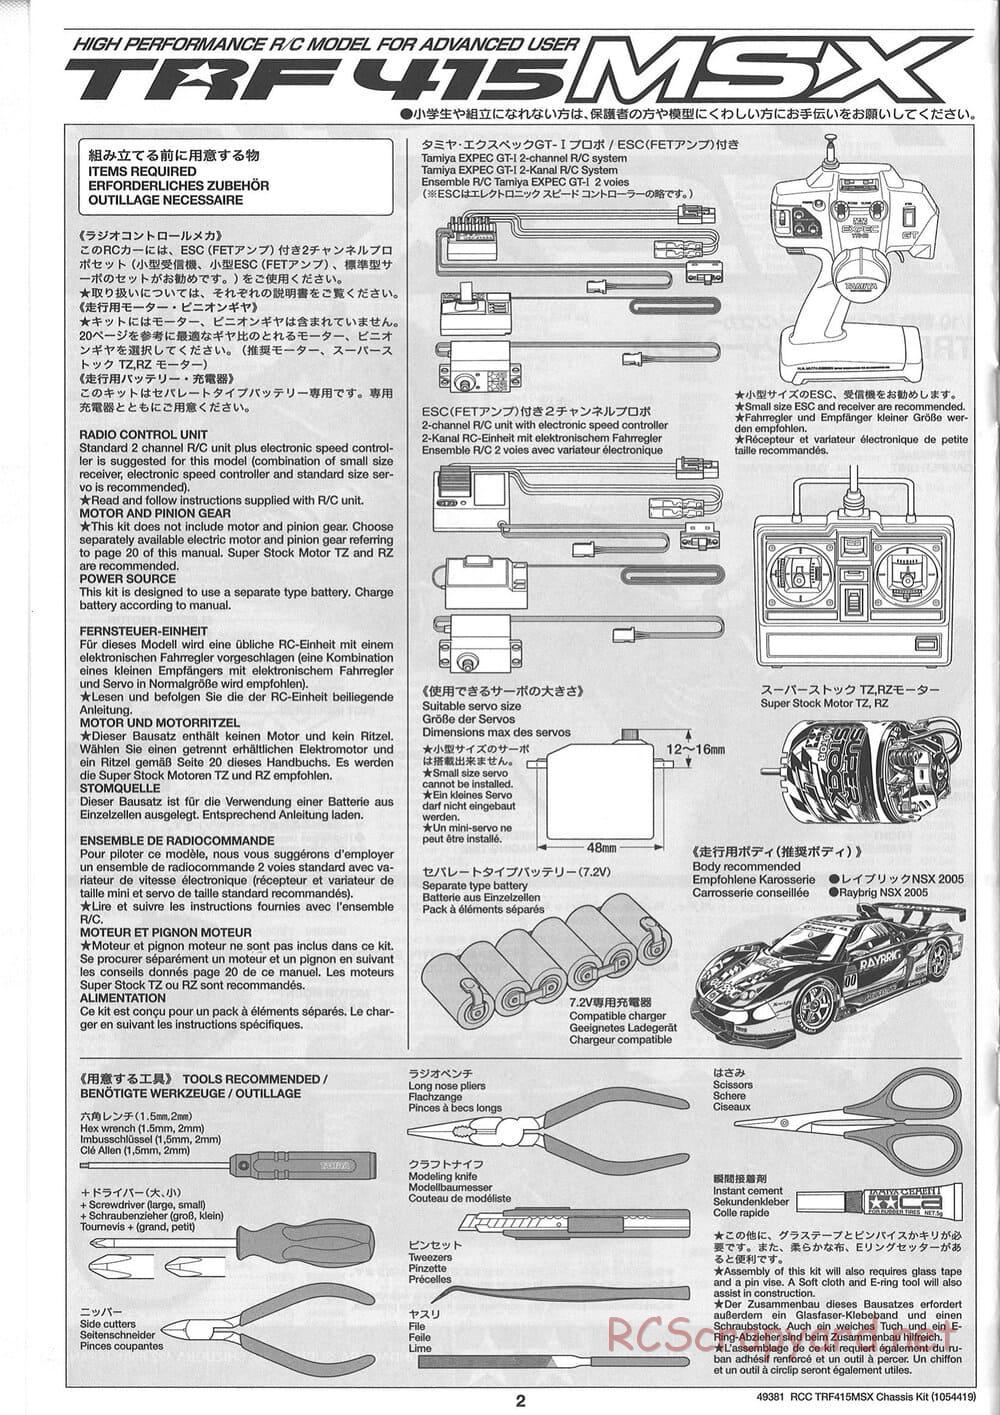 Tamiya - TRF415-MSX Chassis - Manual - Page 2